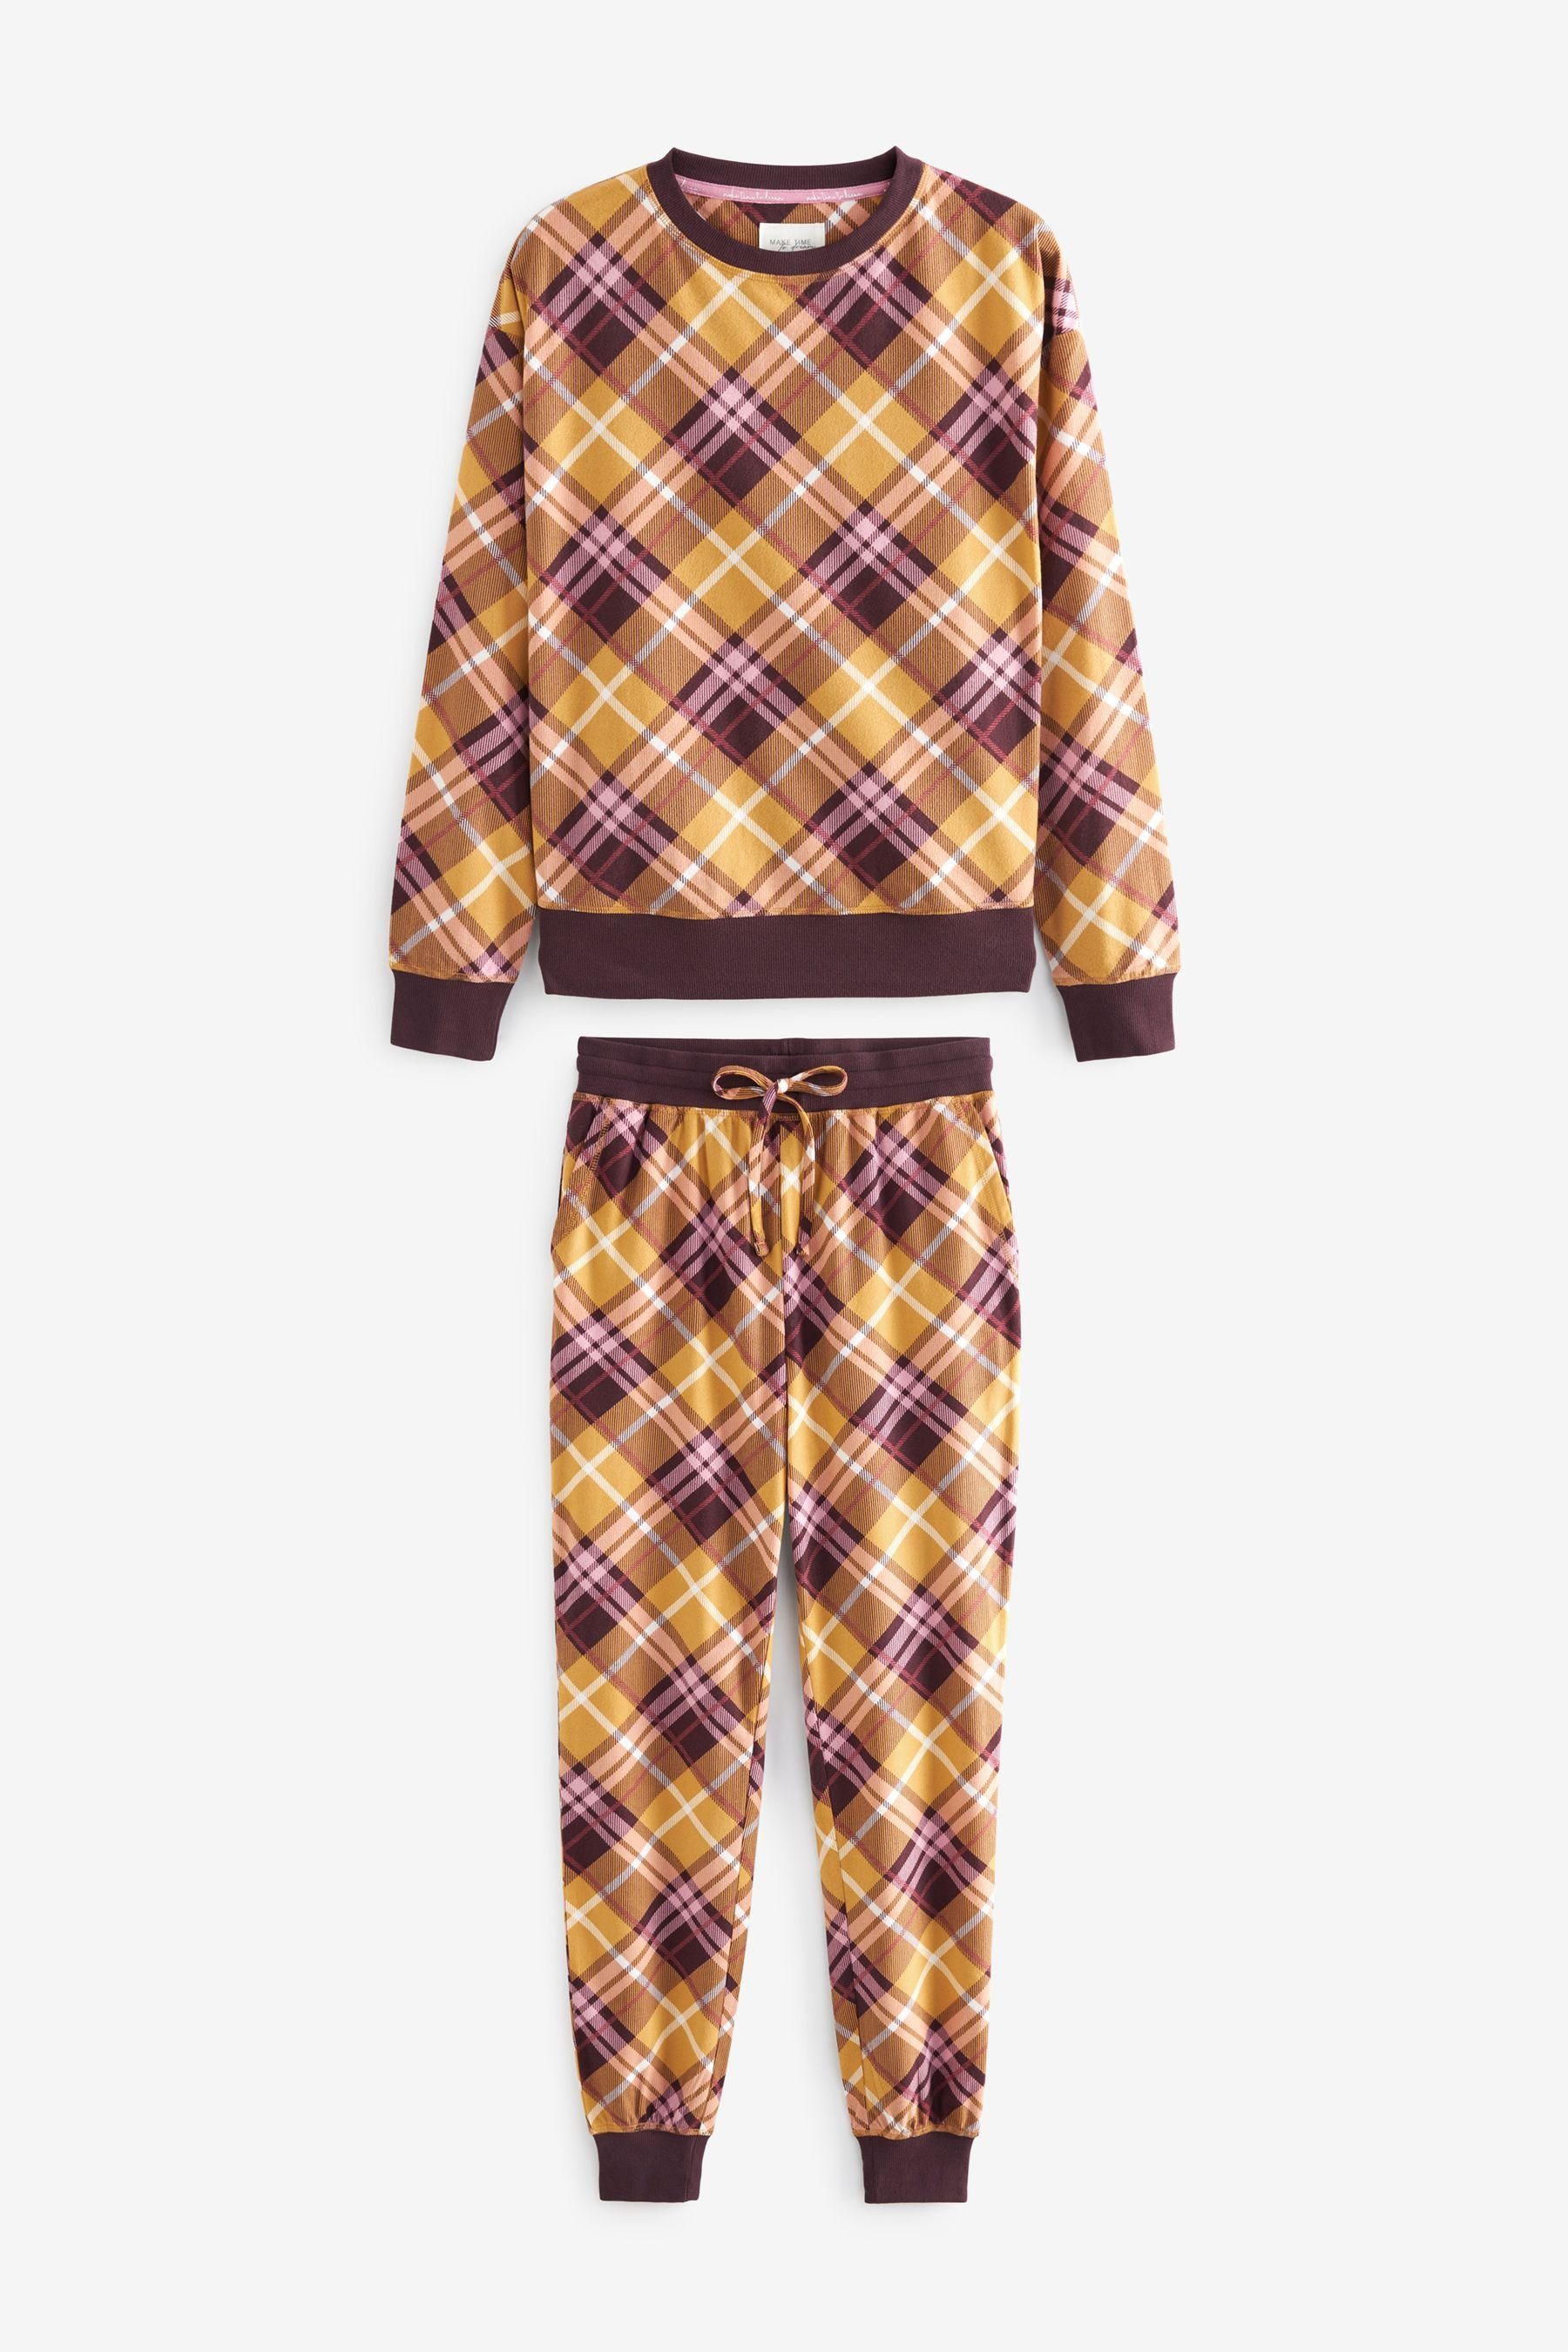 Next tlg) Pyjama Bequemer (2 Pyjama Ochre Yellow Check